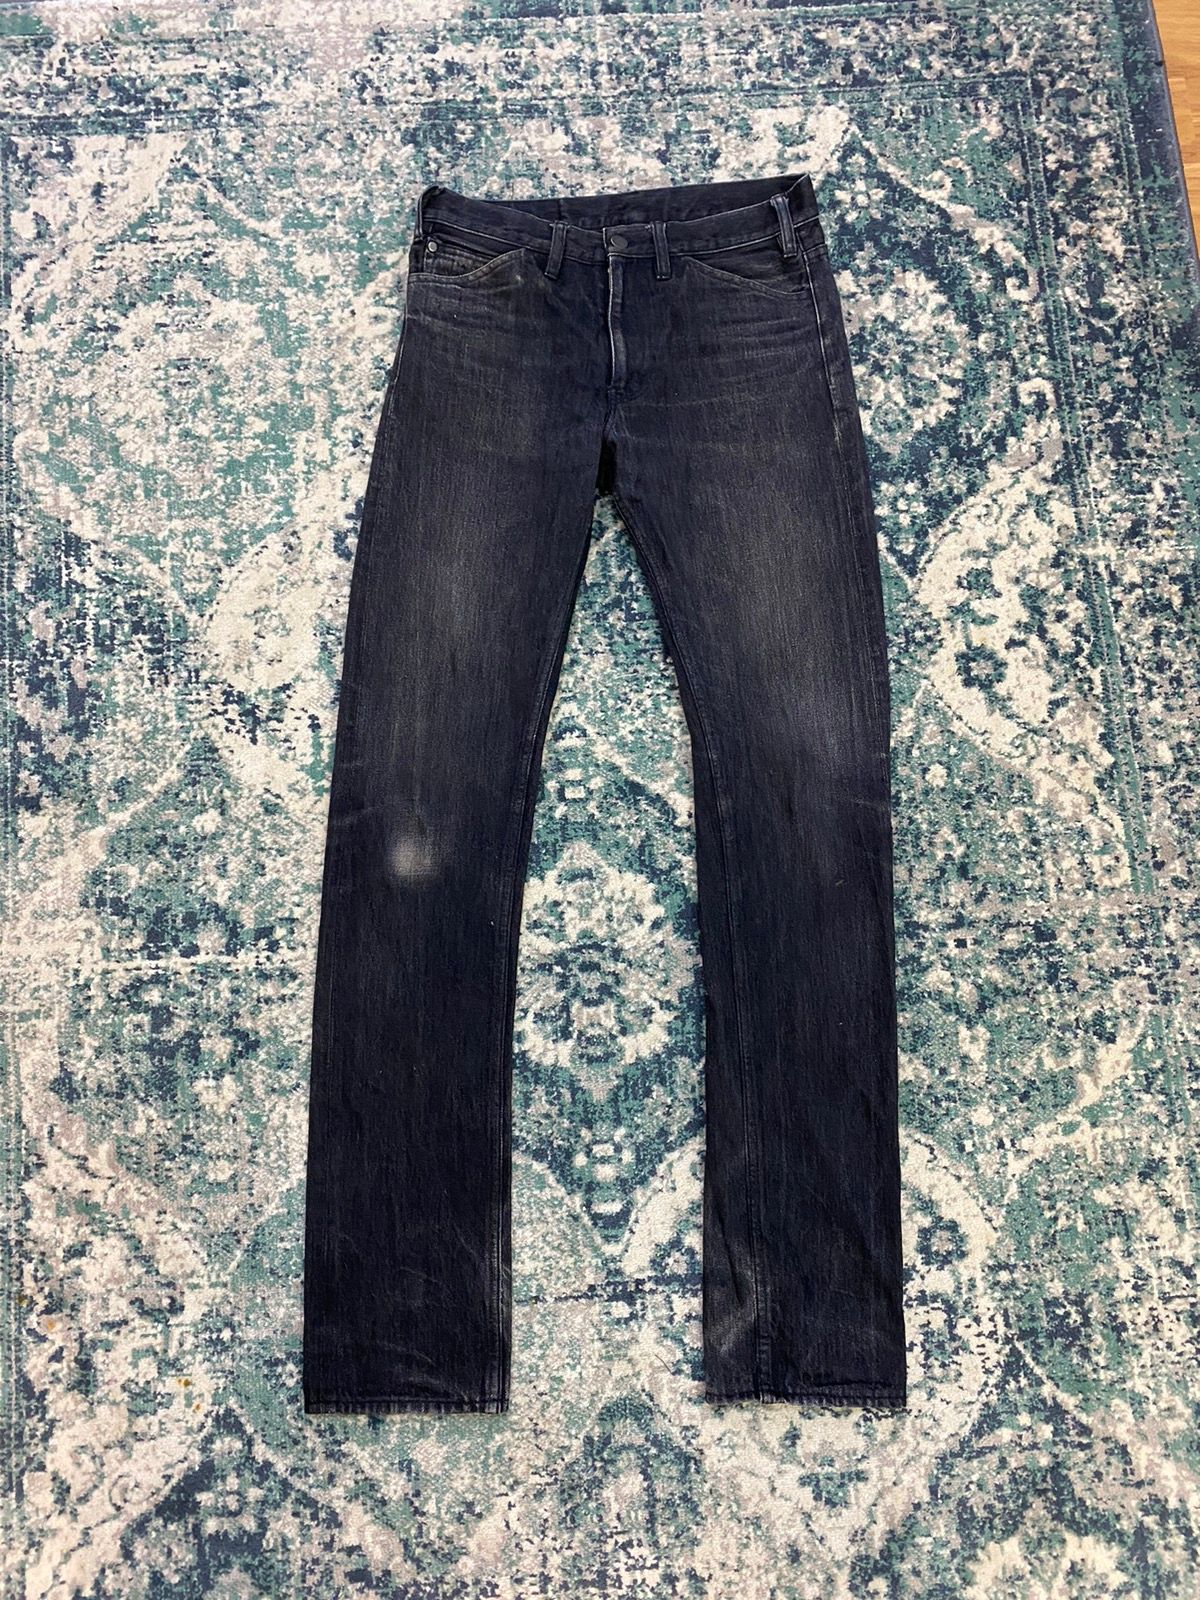 Lemaire Black Leather Lining Pocket Jeans - 2